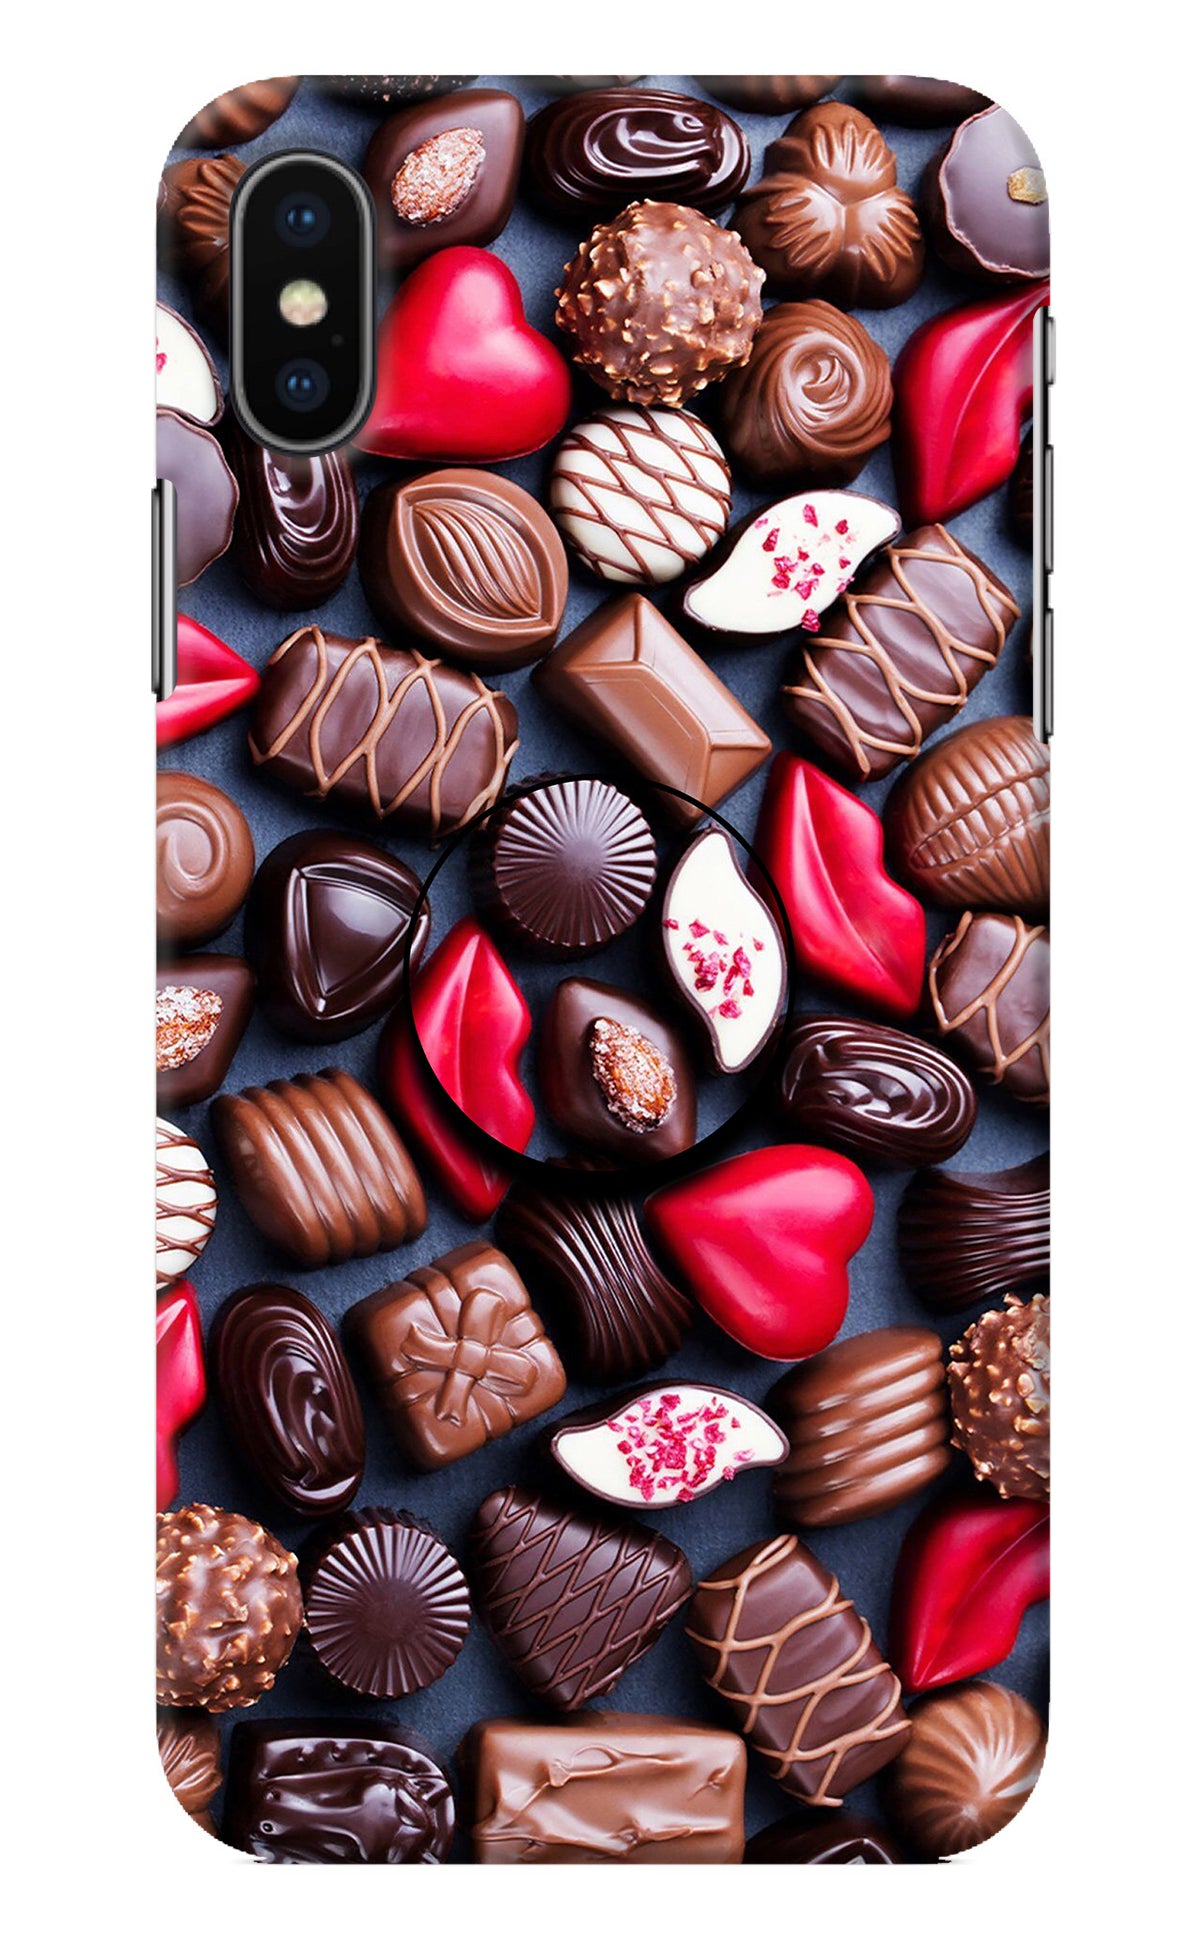 Chocolates iPhone XS Pop Case